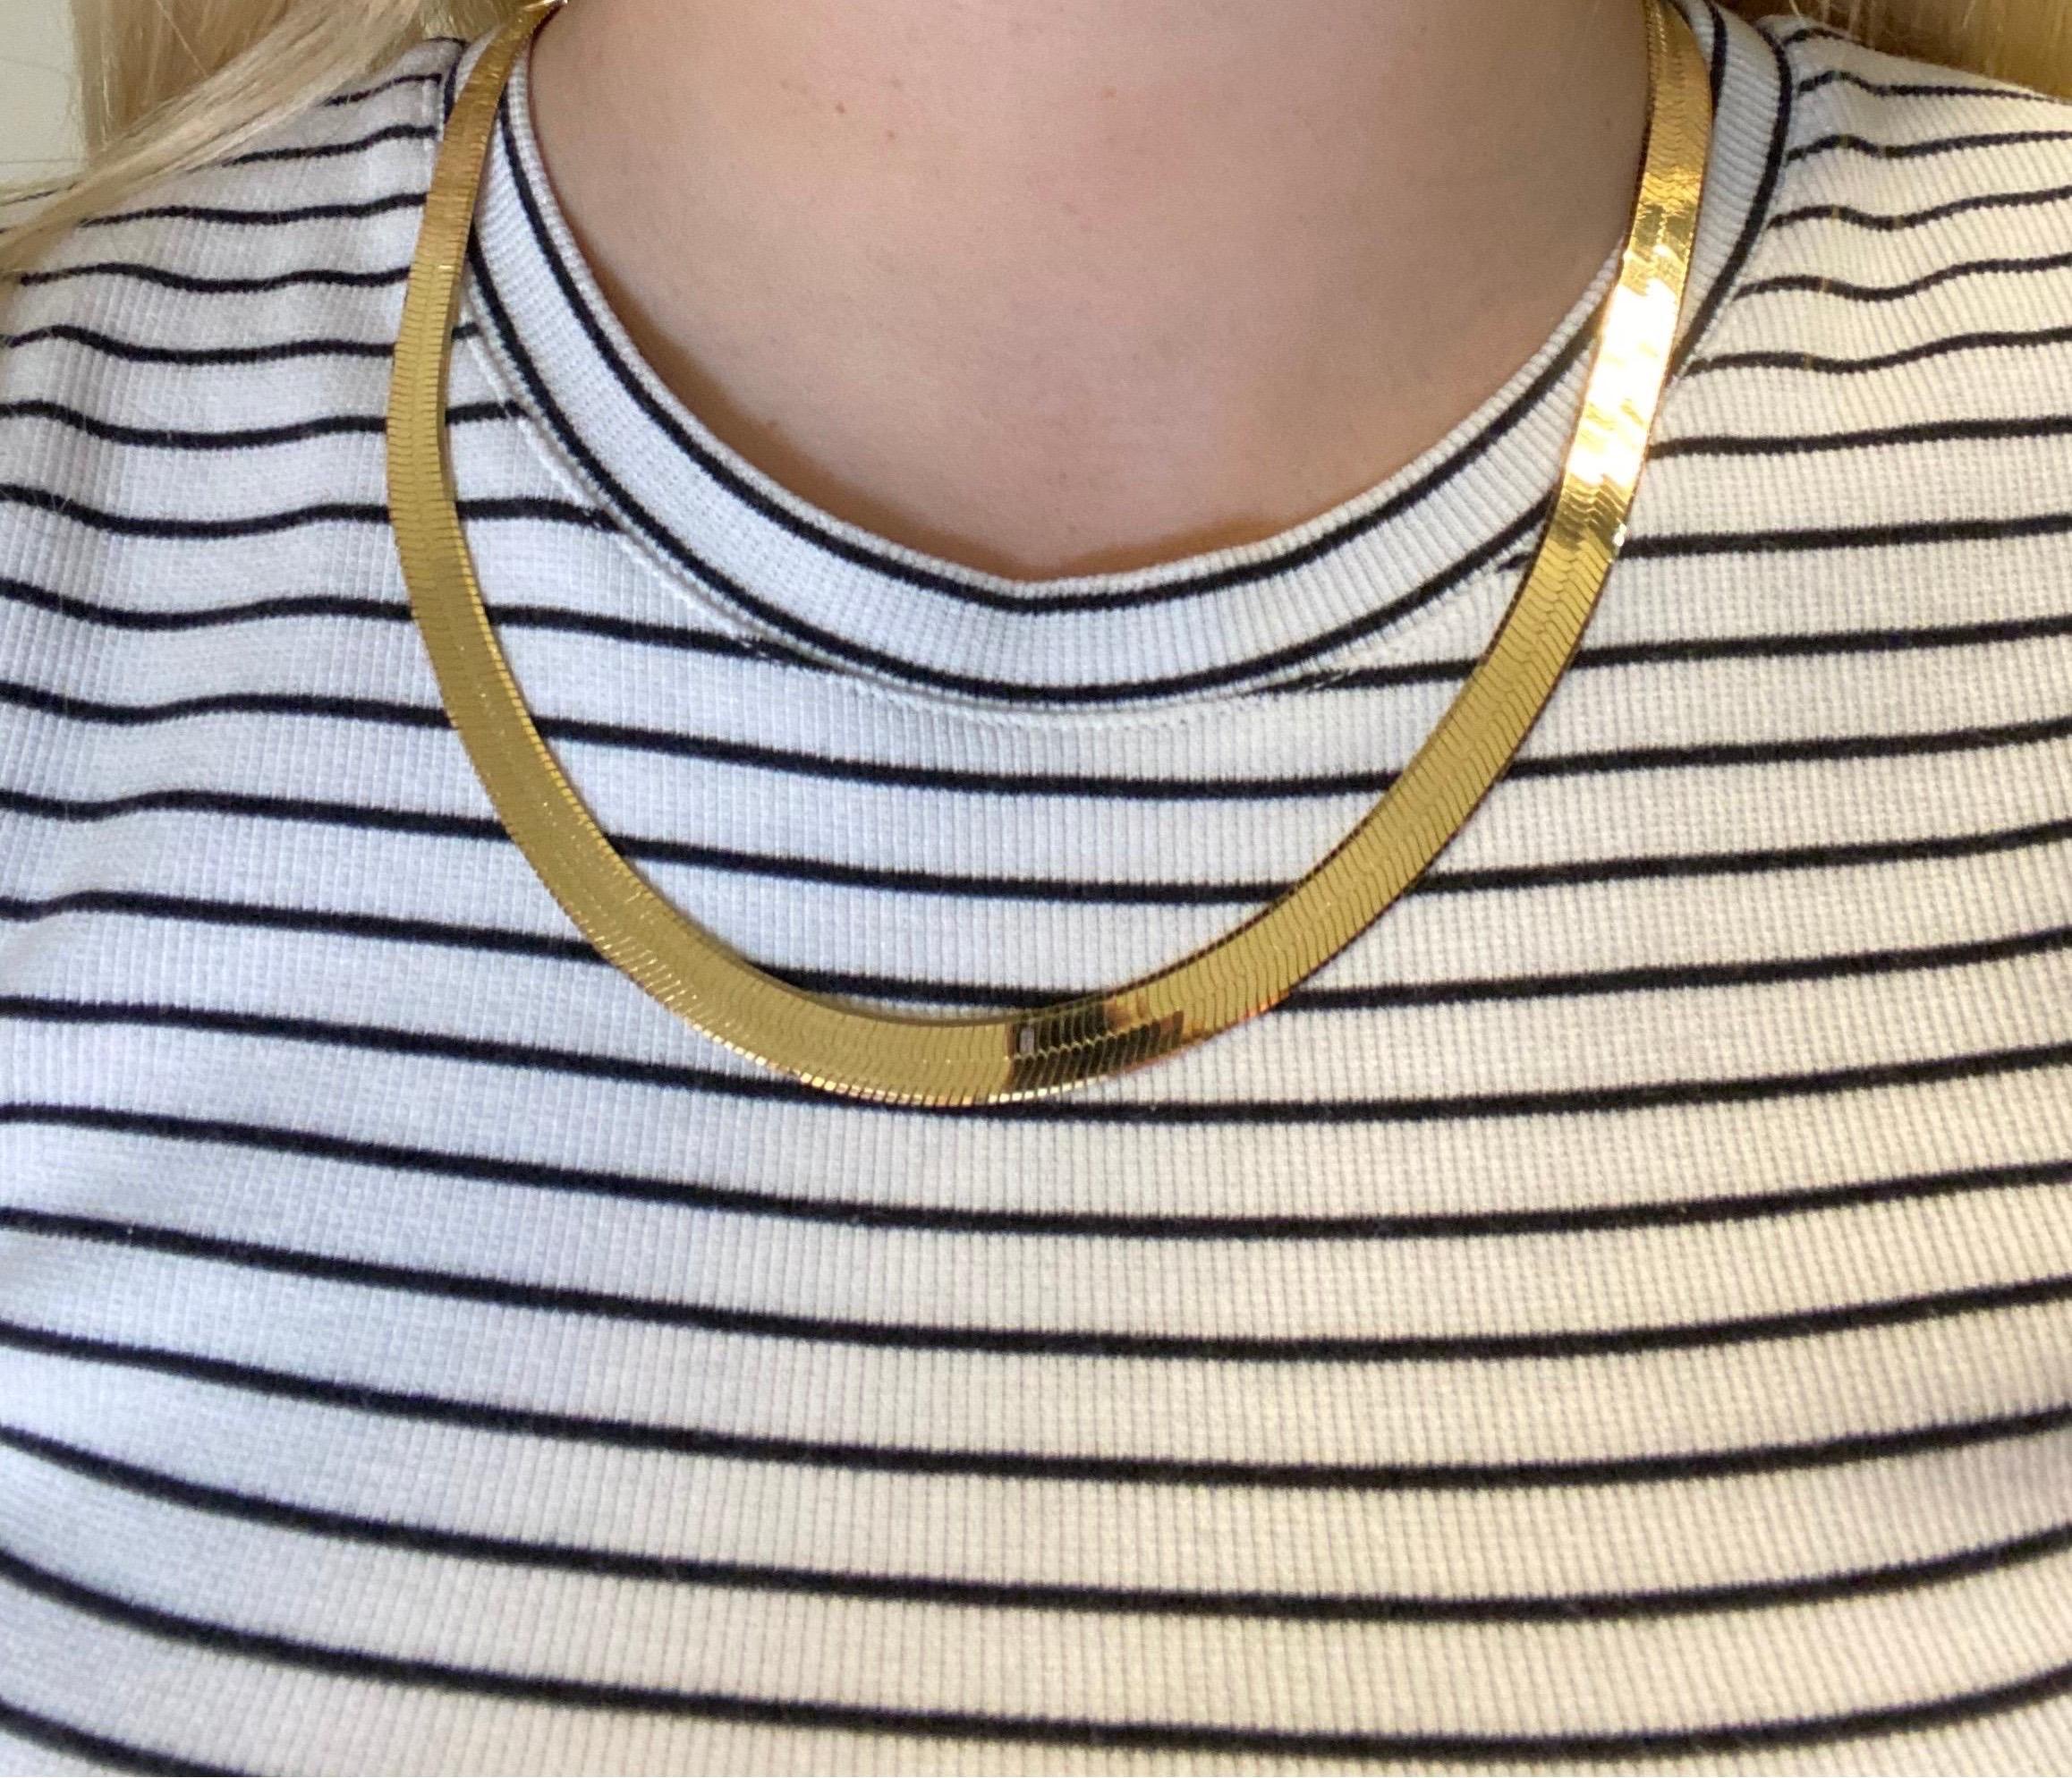 14k gold herringbone necklace 16 inch